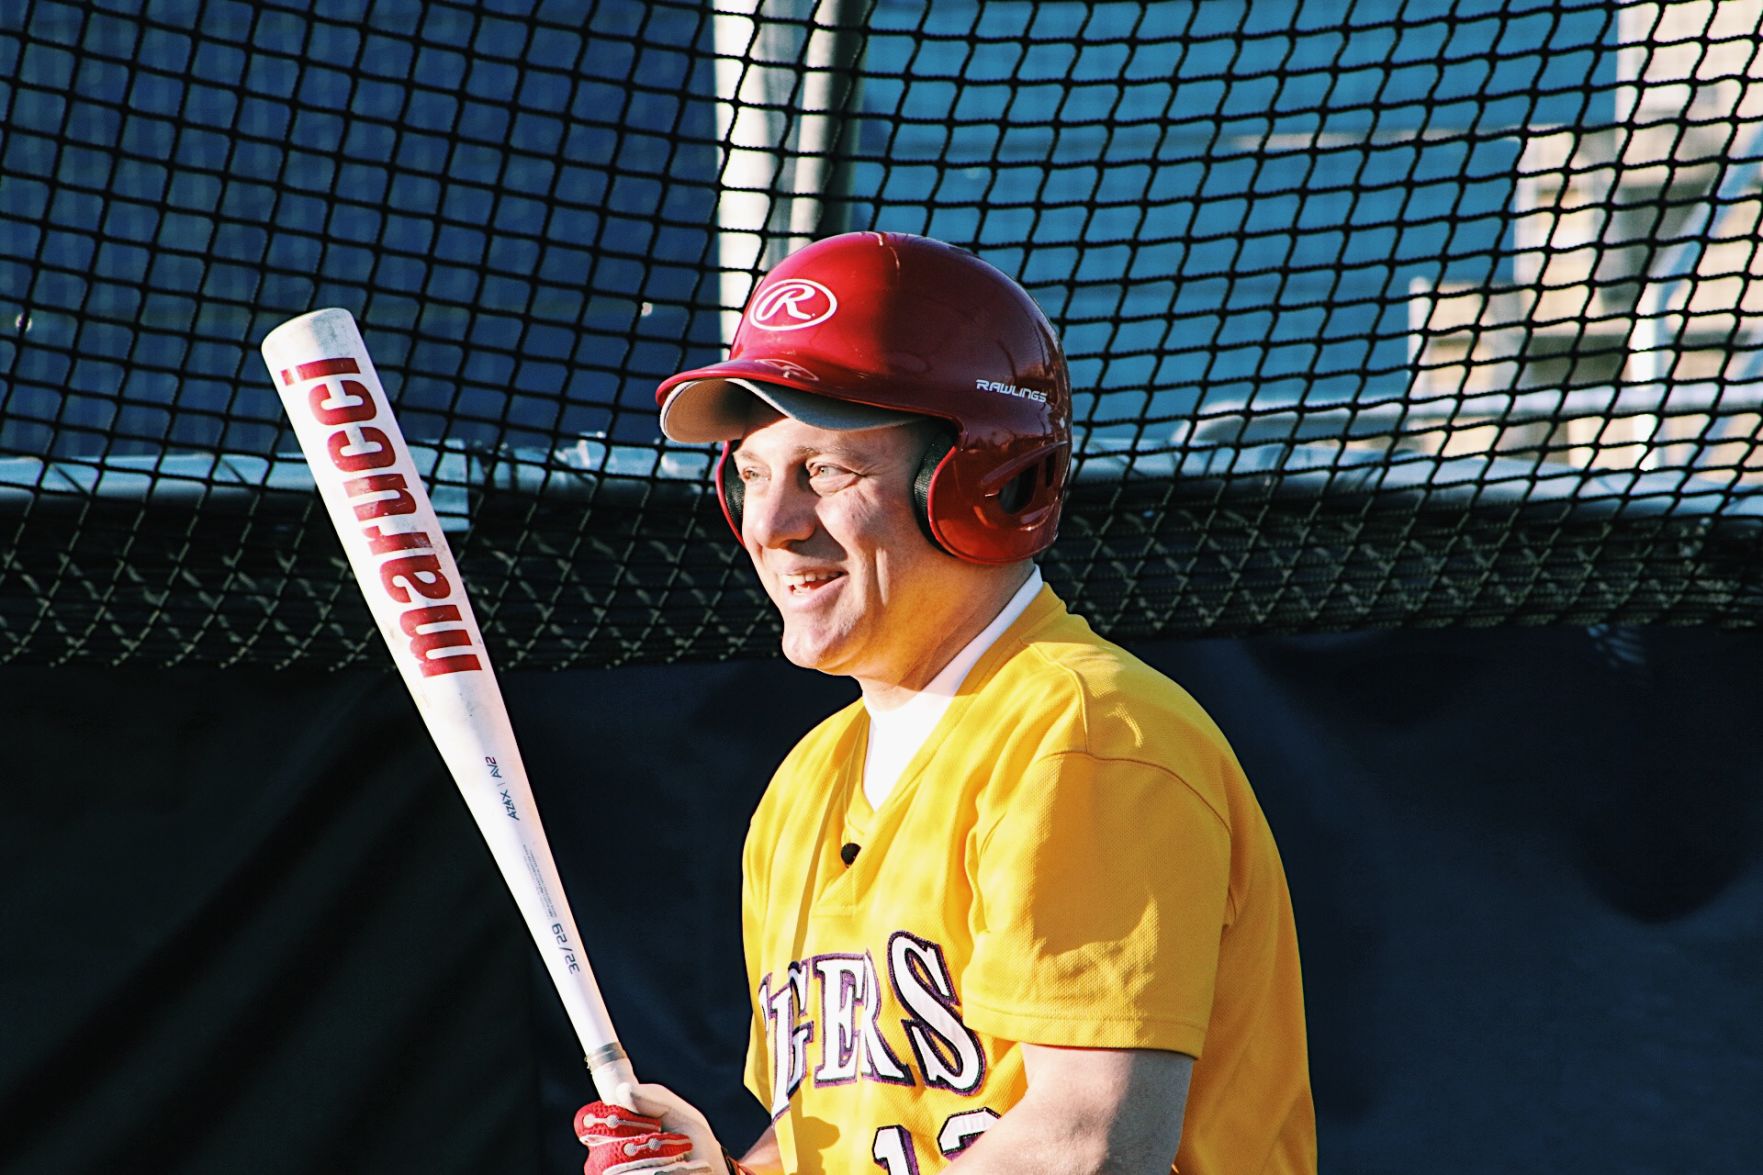 Diamond Zone Baseball Lists @ $75 Softball Bat Backpack NEW 